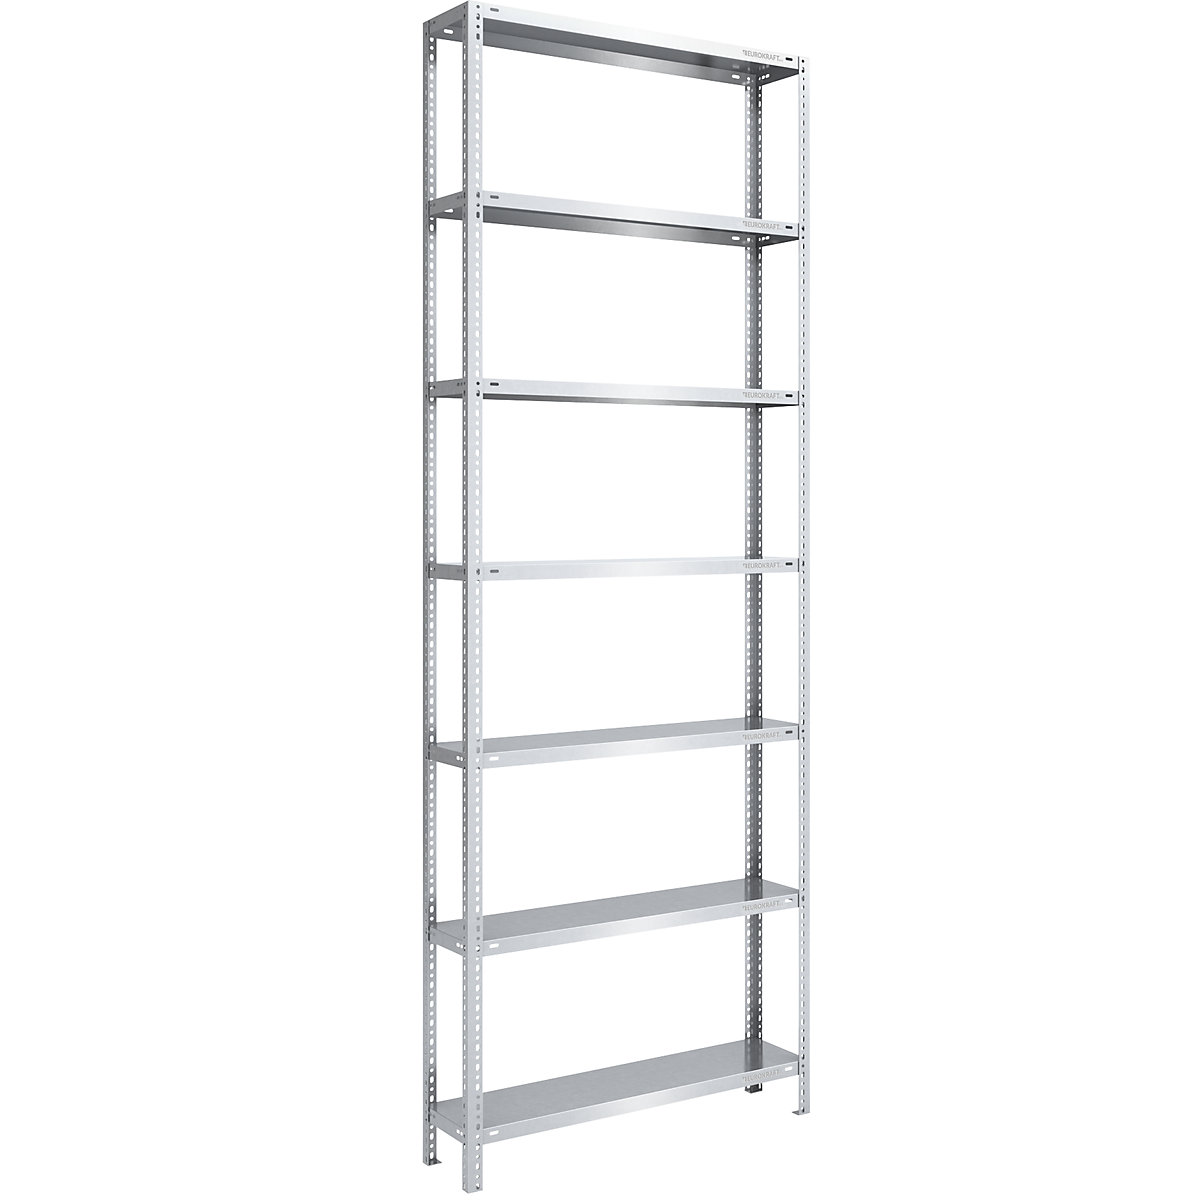 Bolt-together storage shelving, zinc plated, medium duty – eurokraft pro, shelf unit height 3000 mm, shelf width 1000 mm, depth 300 mm, standard shelf unit-3